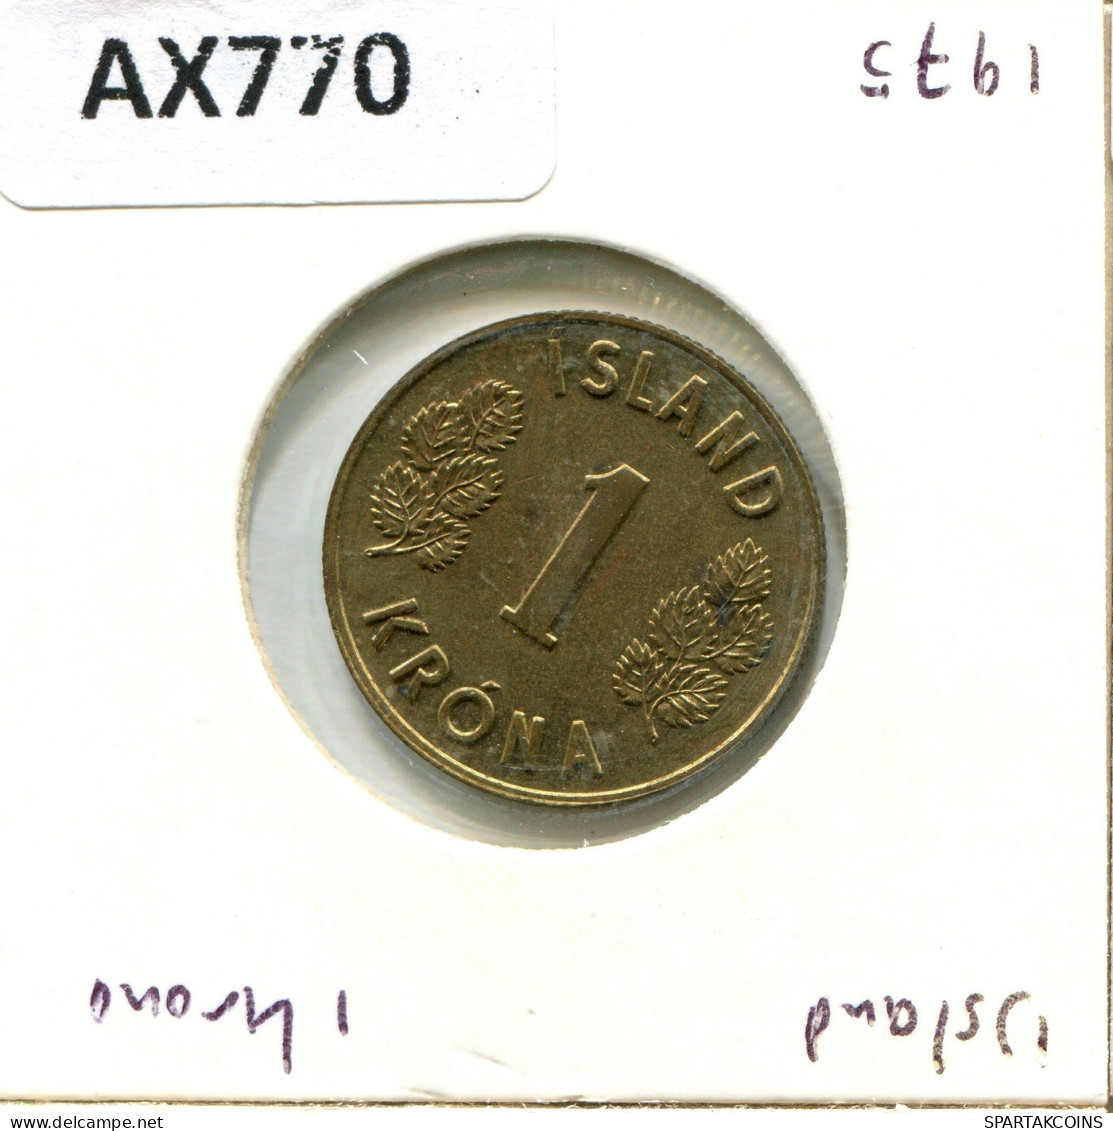 1 KRONA 1975 ICELAND Coin #AX770.U.A - Islanda